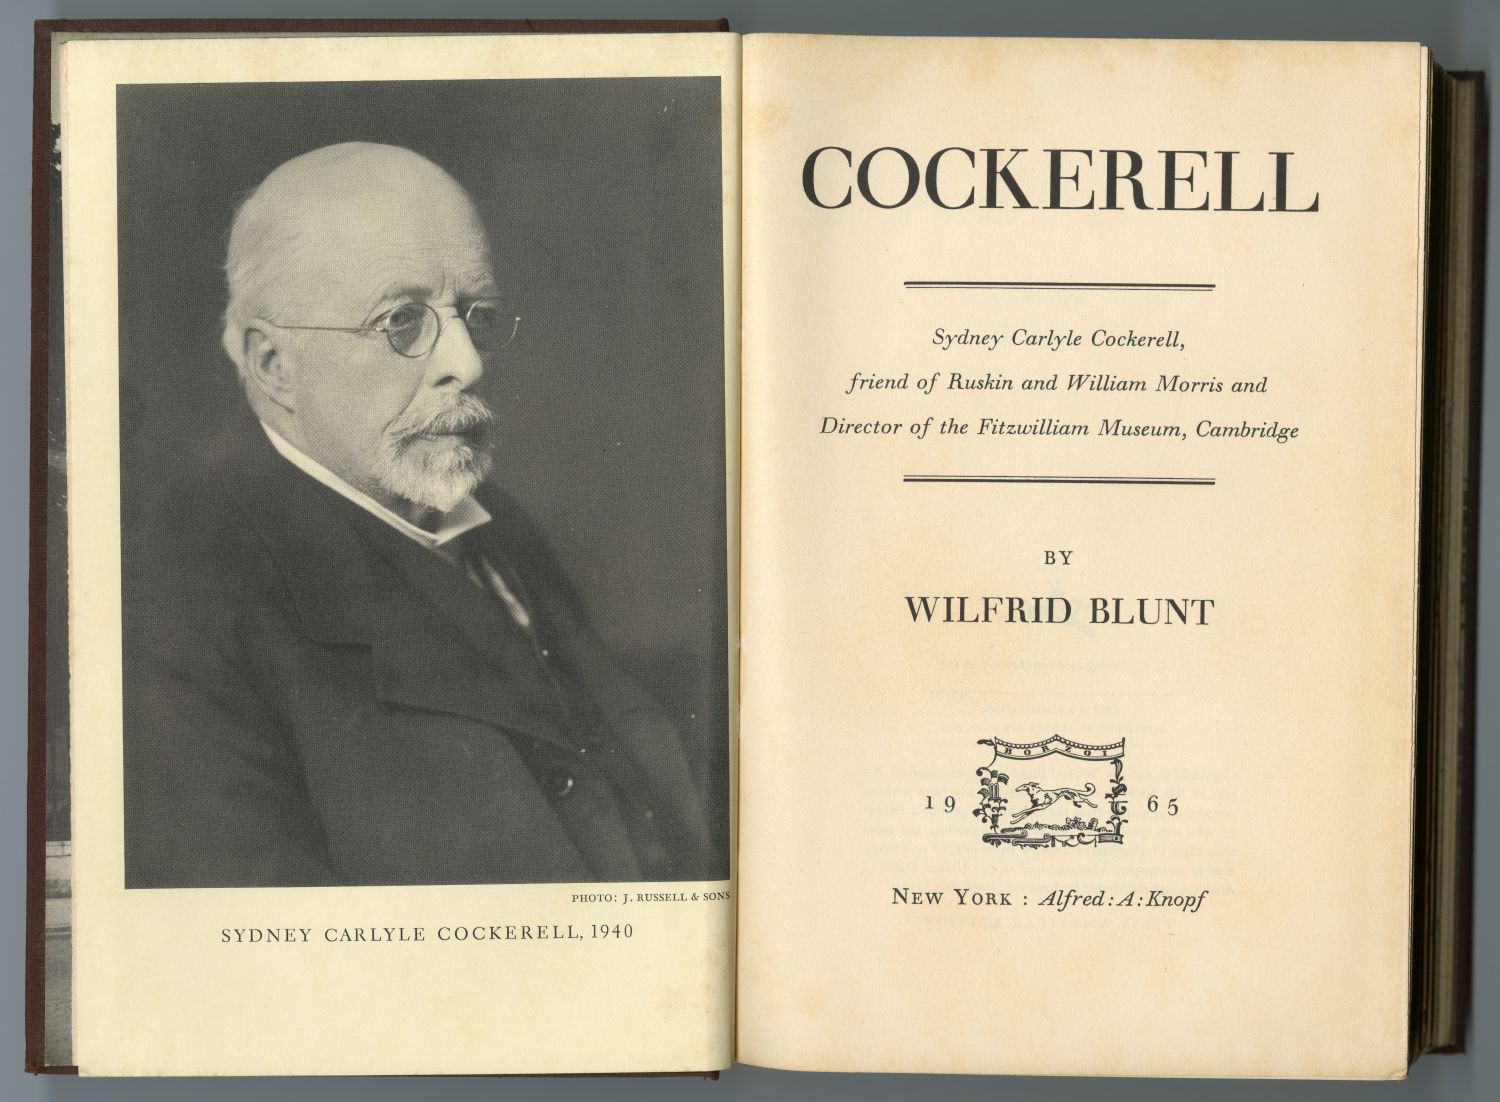 『Cockerll』（1965年、Alfred A Knopf）扉